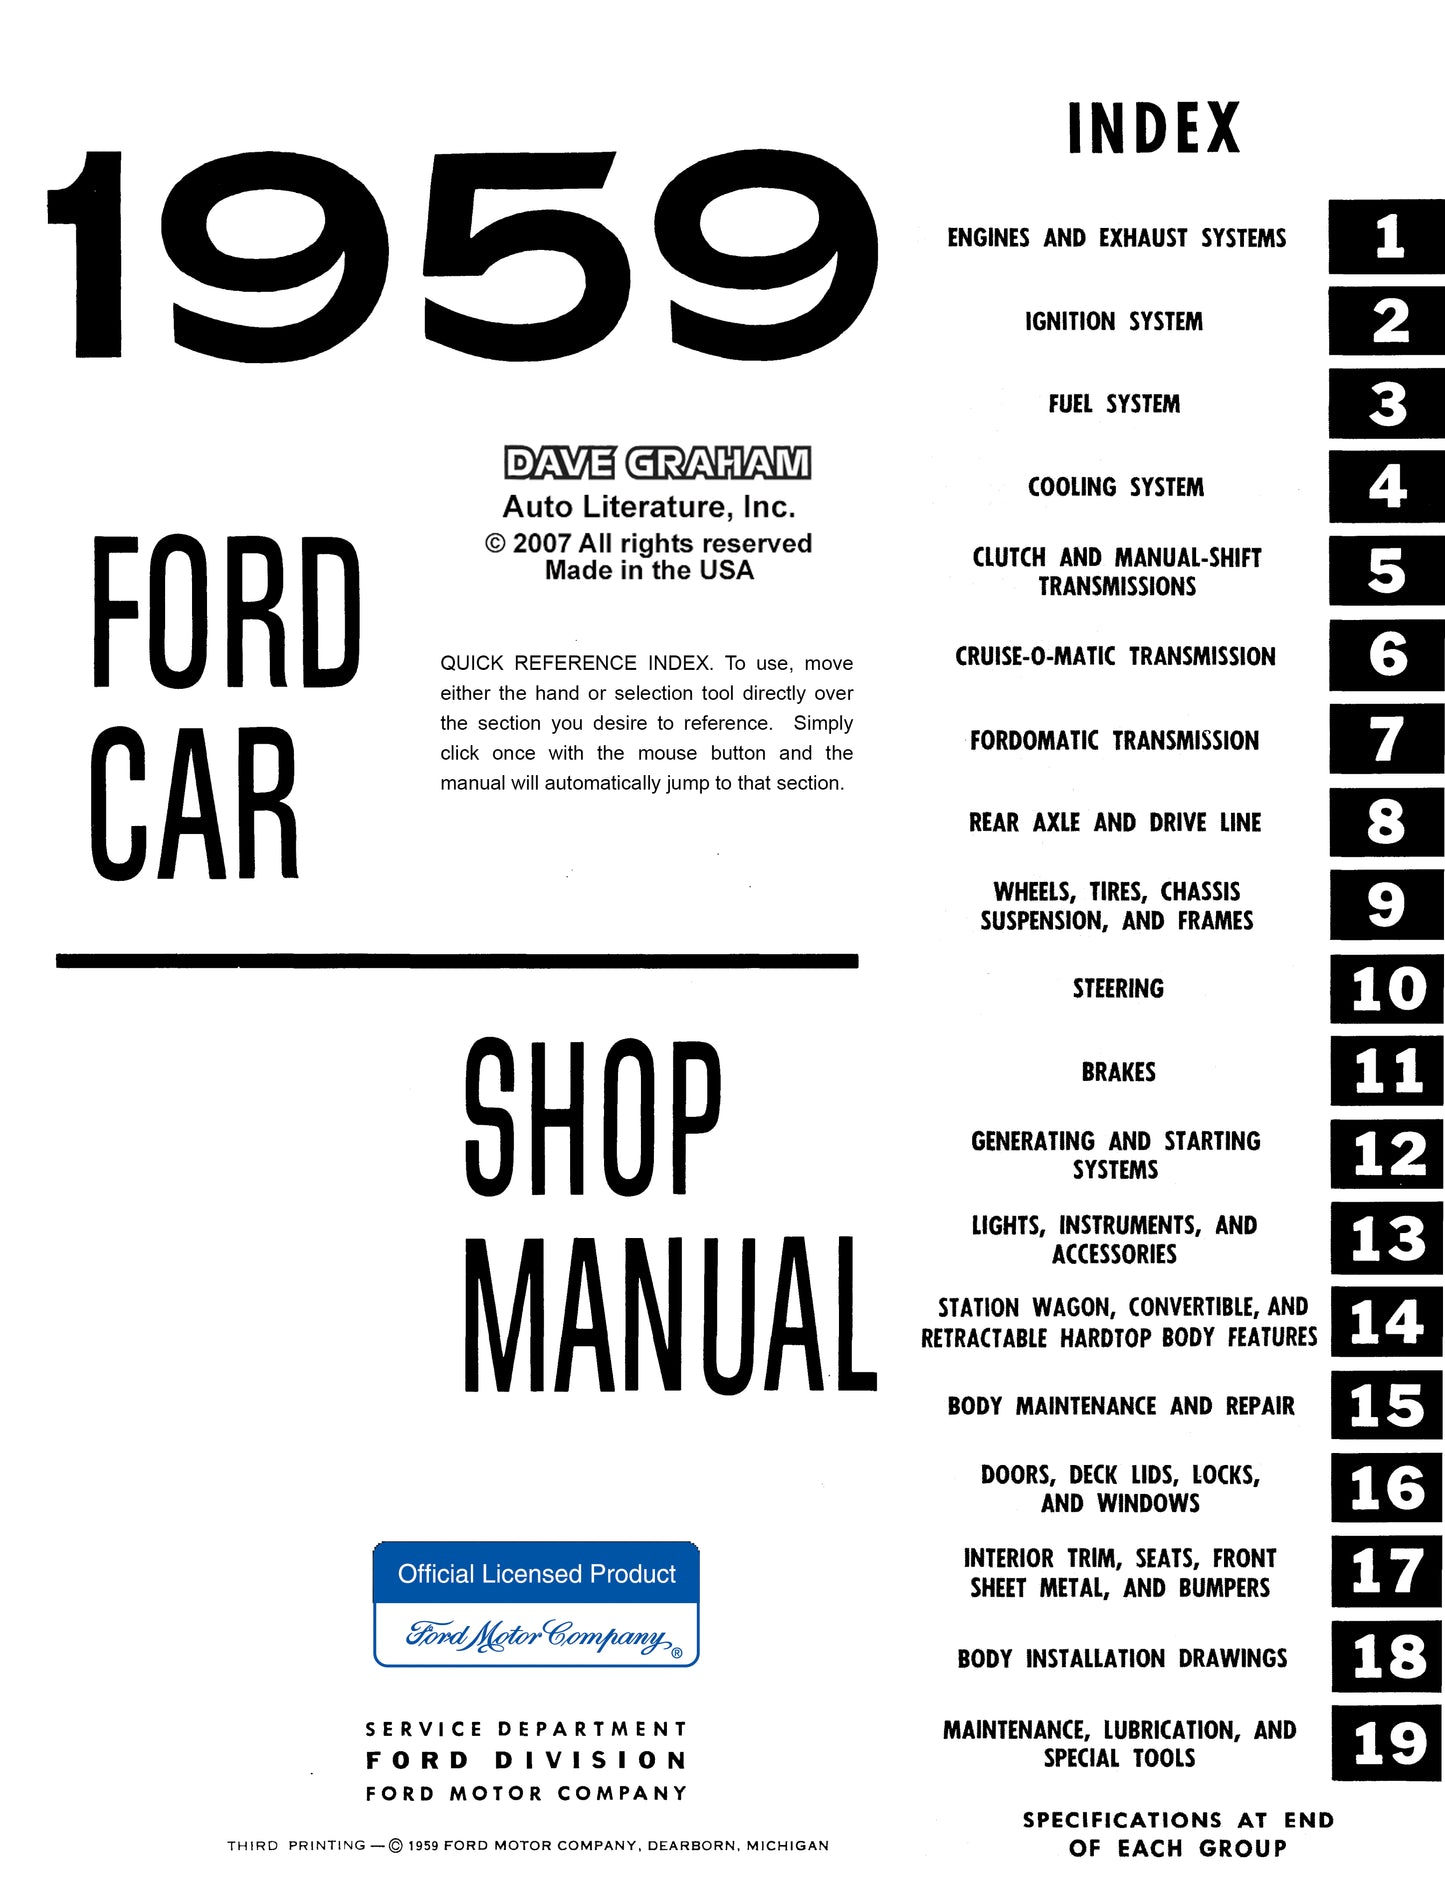 1959 Ford Shop Manual - All Models